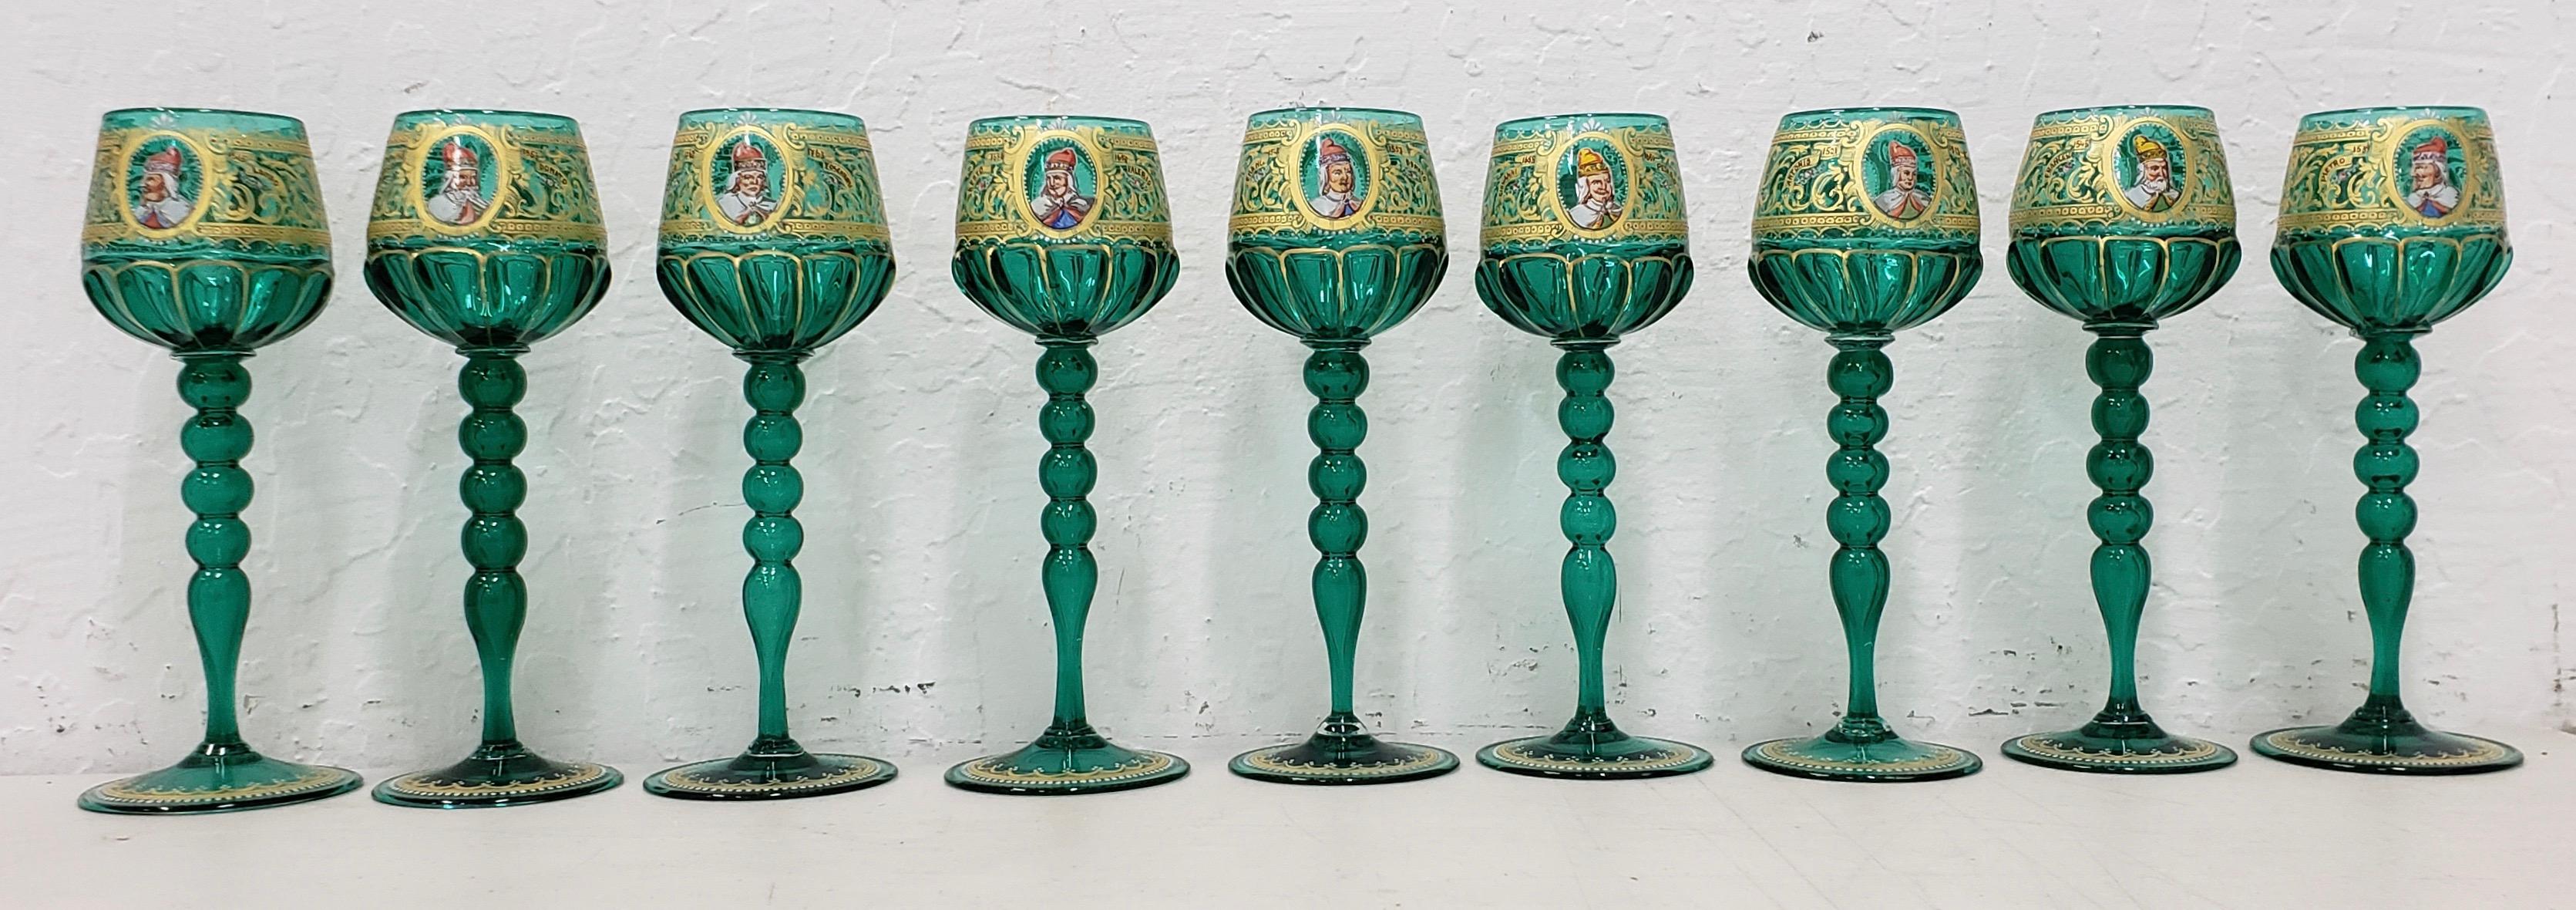 Set of nine Salviati Murano wine glasses hand painted with notable Venetian figures

circa 1930

Each glass is hand painted and hand gilded.

Dimensions 2.5